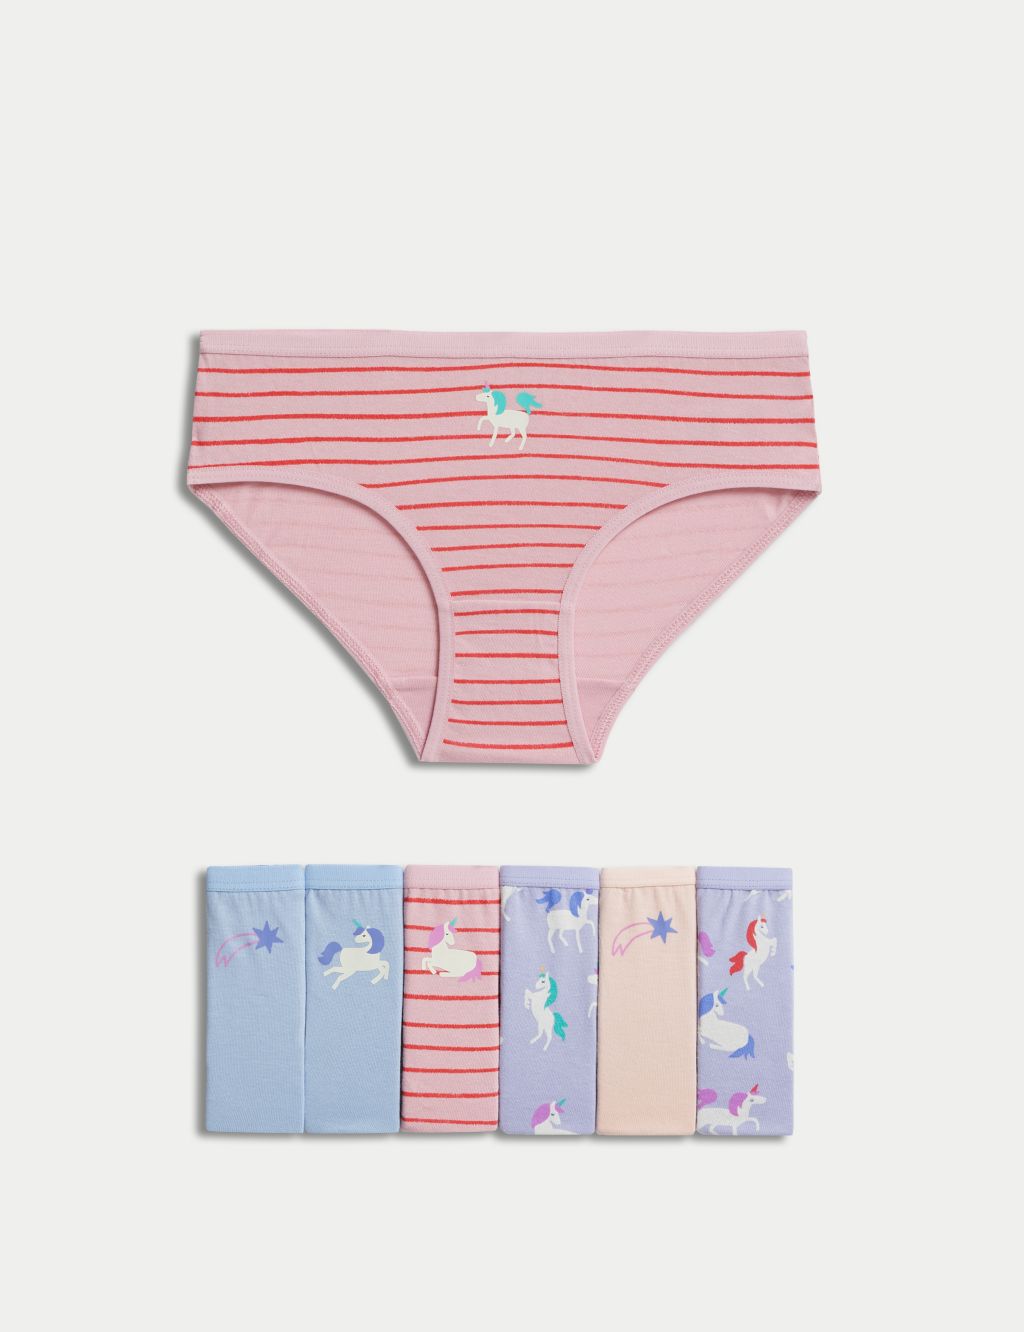 Enfant Unisex boy girl Baby White Panty Brief (White , pink , blue